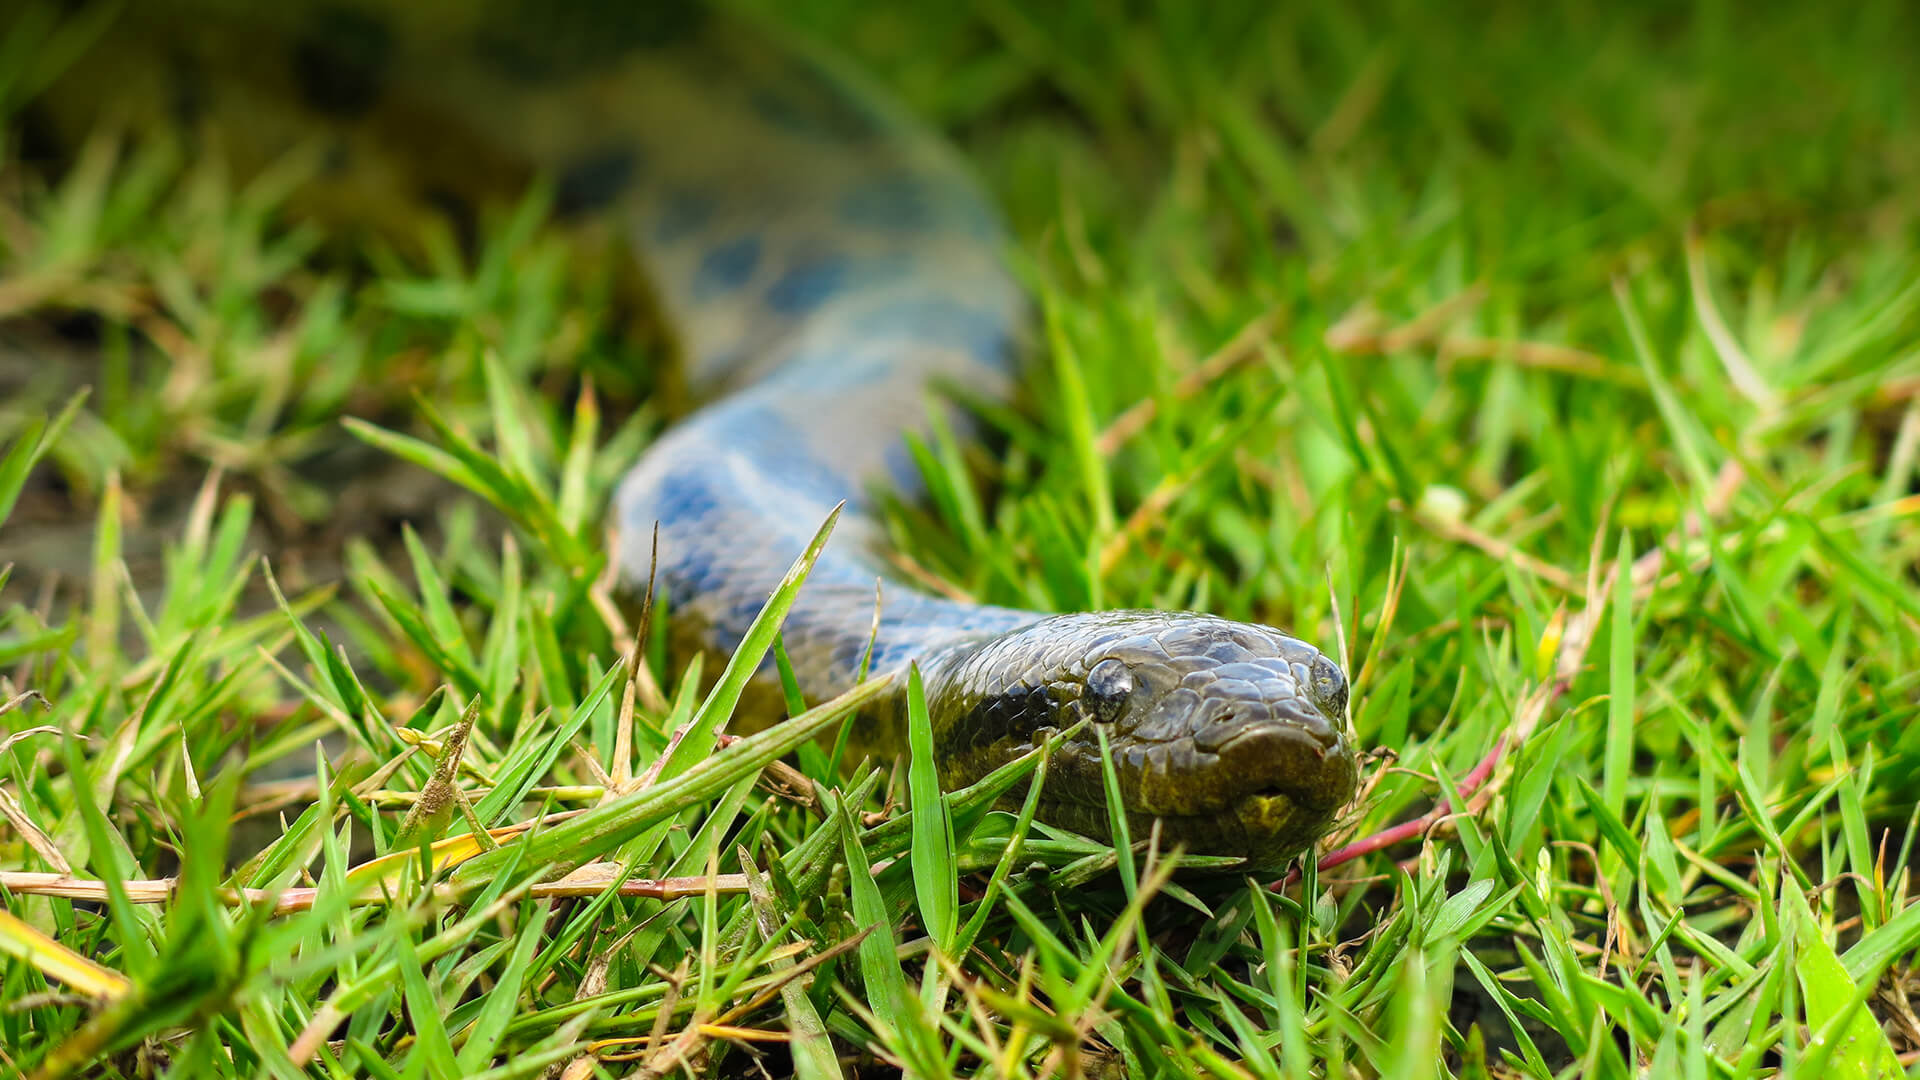 Anaconda slithers through the grass